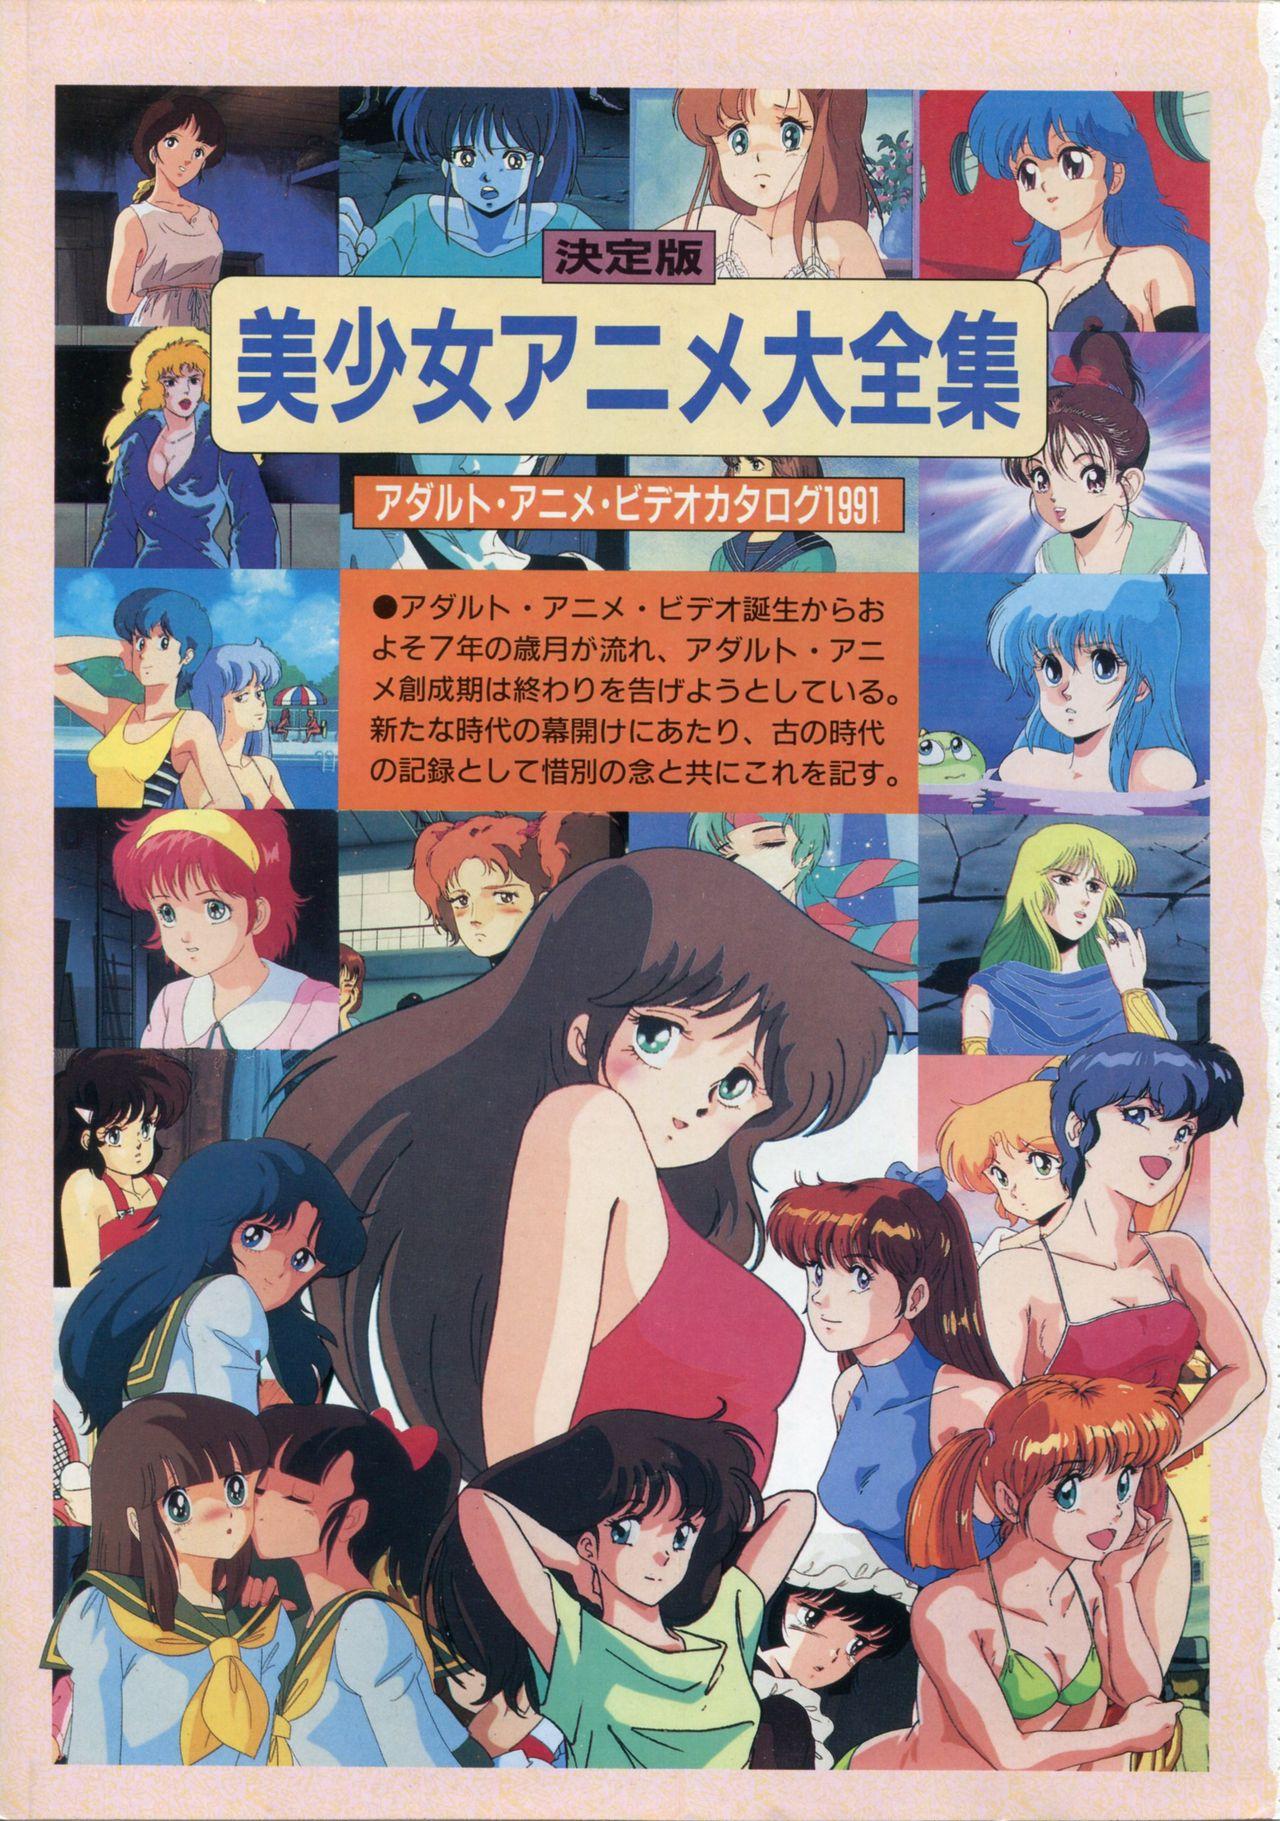 Bishoujo Anime Daizenshuu - Adult Animation Video Catalog 1991 4